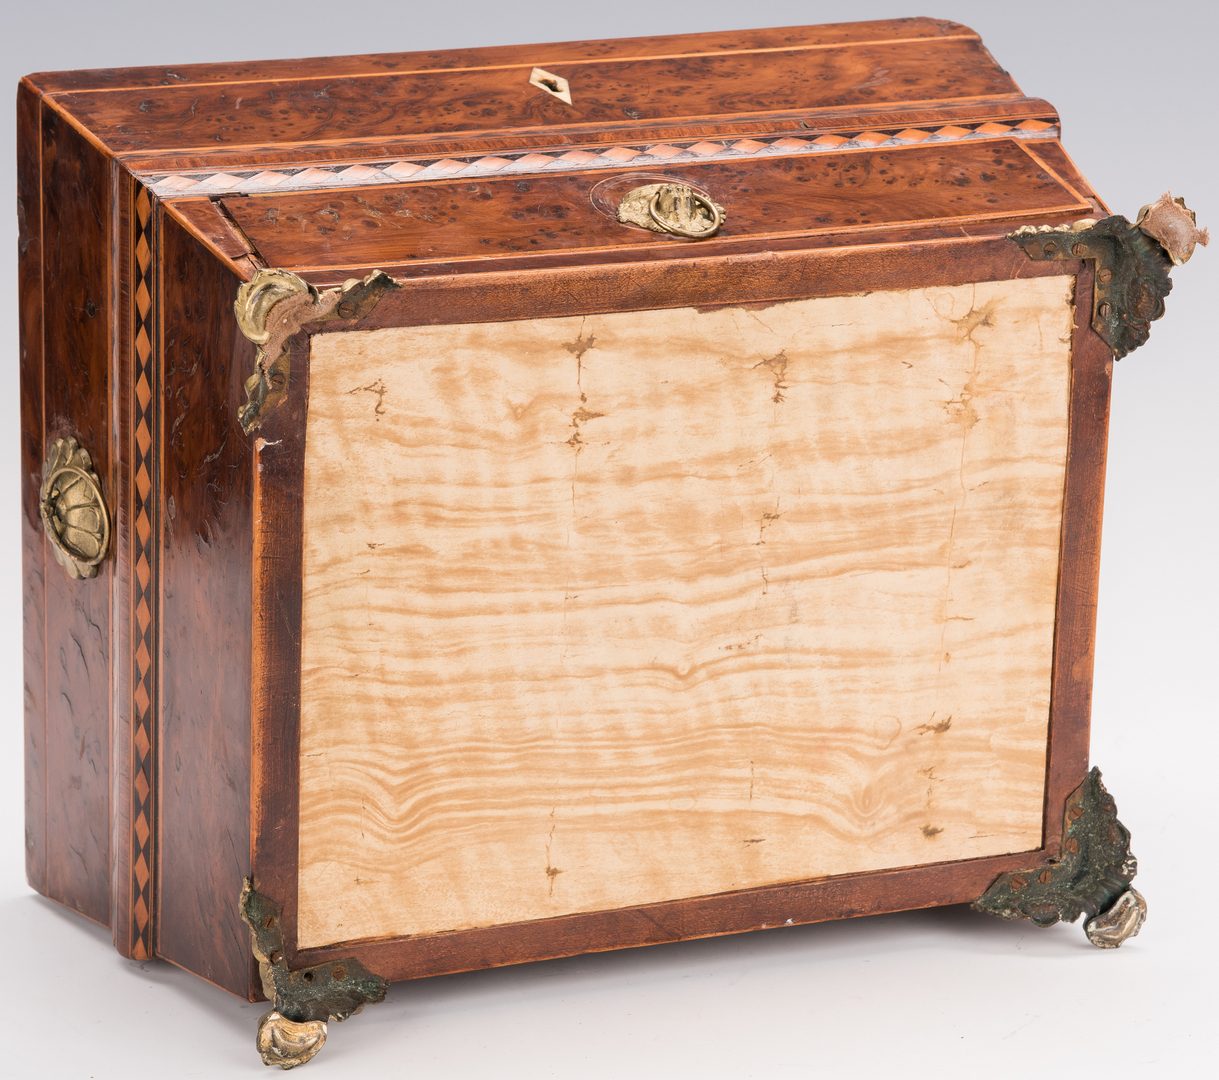 Lot 346: English Regency Burlwood Sewing Box